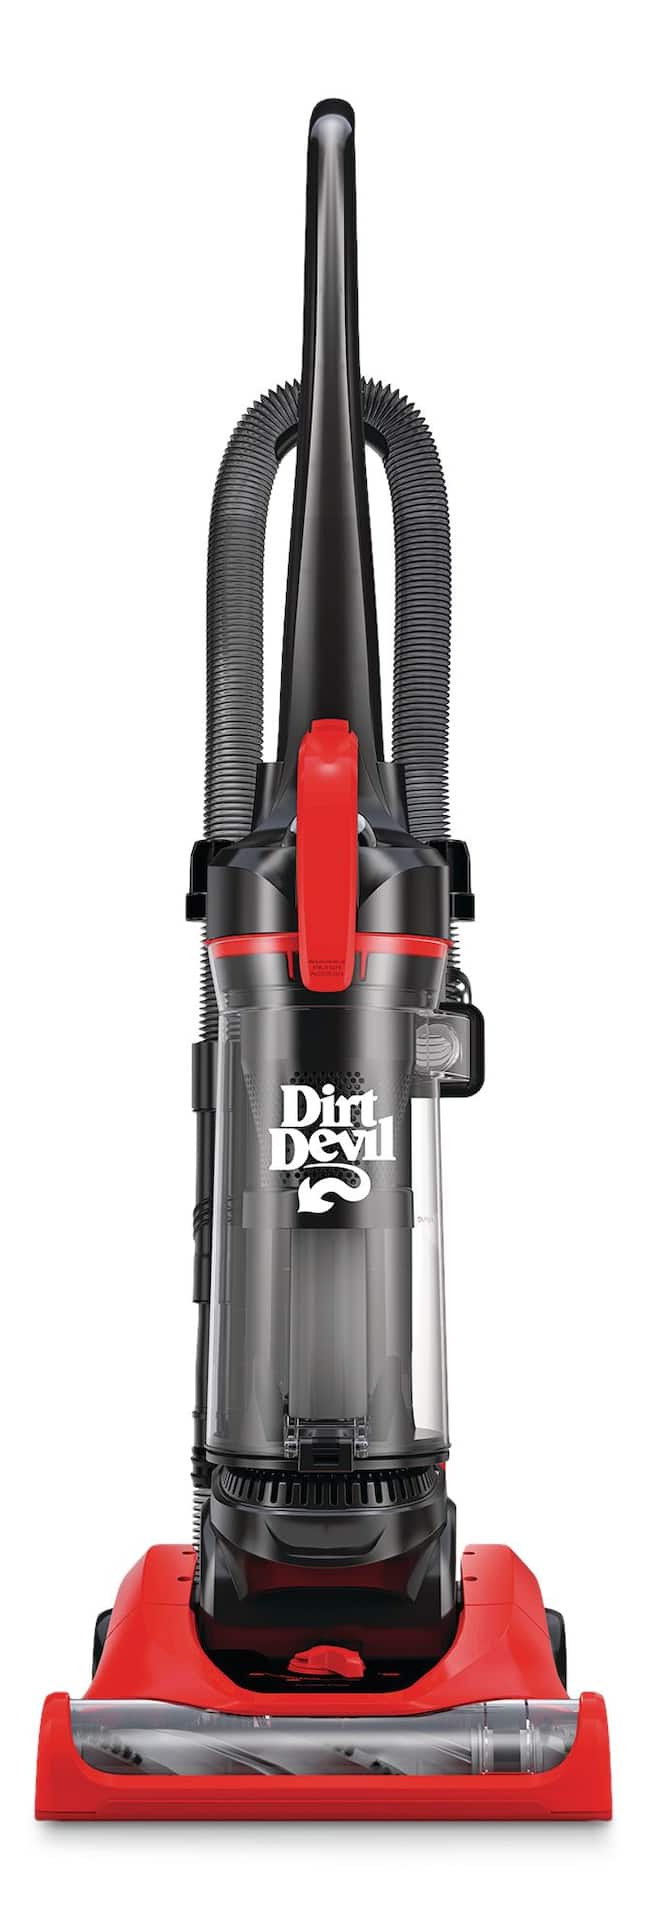 Dirt Devil Multi Surface Plus Corded Upright Vacuum Cleaner